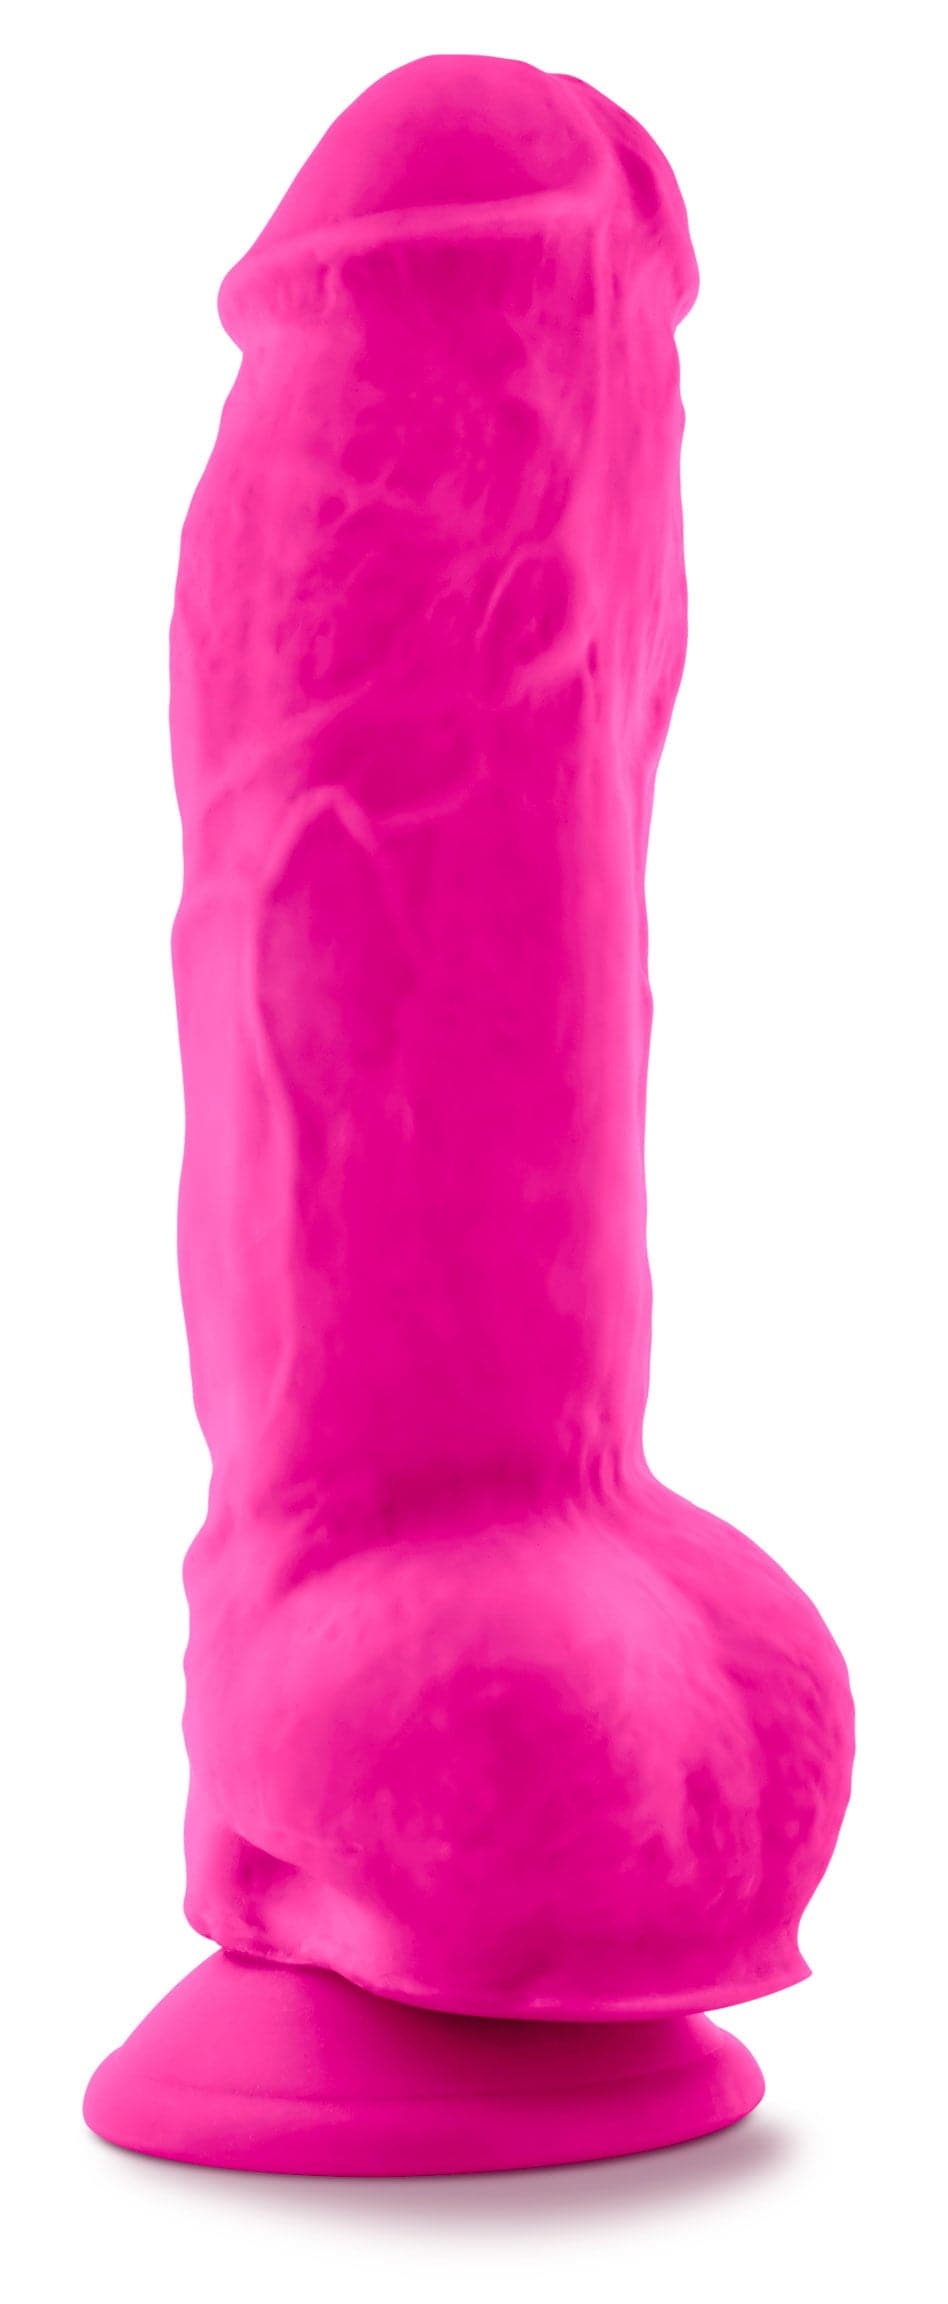 au naturel bold big boy 10 inch dildo pink